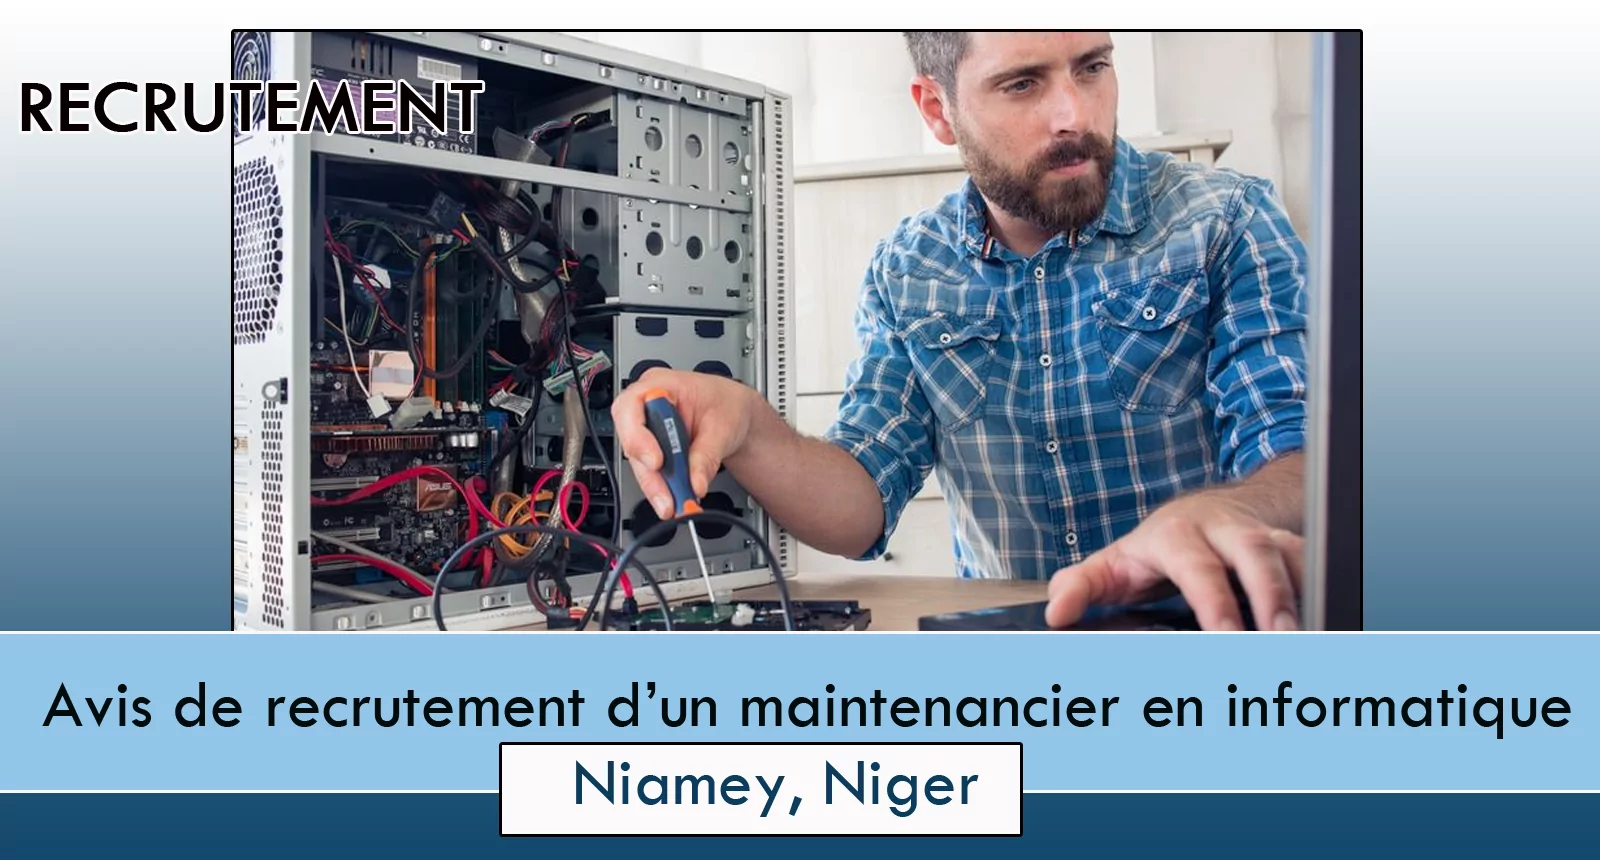 Avis de recrutement d’un maintenancier en informatique, Niamey, Niger